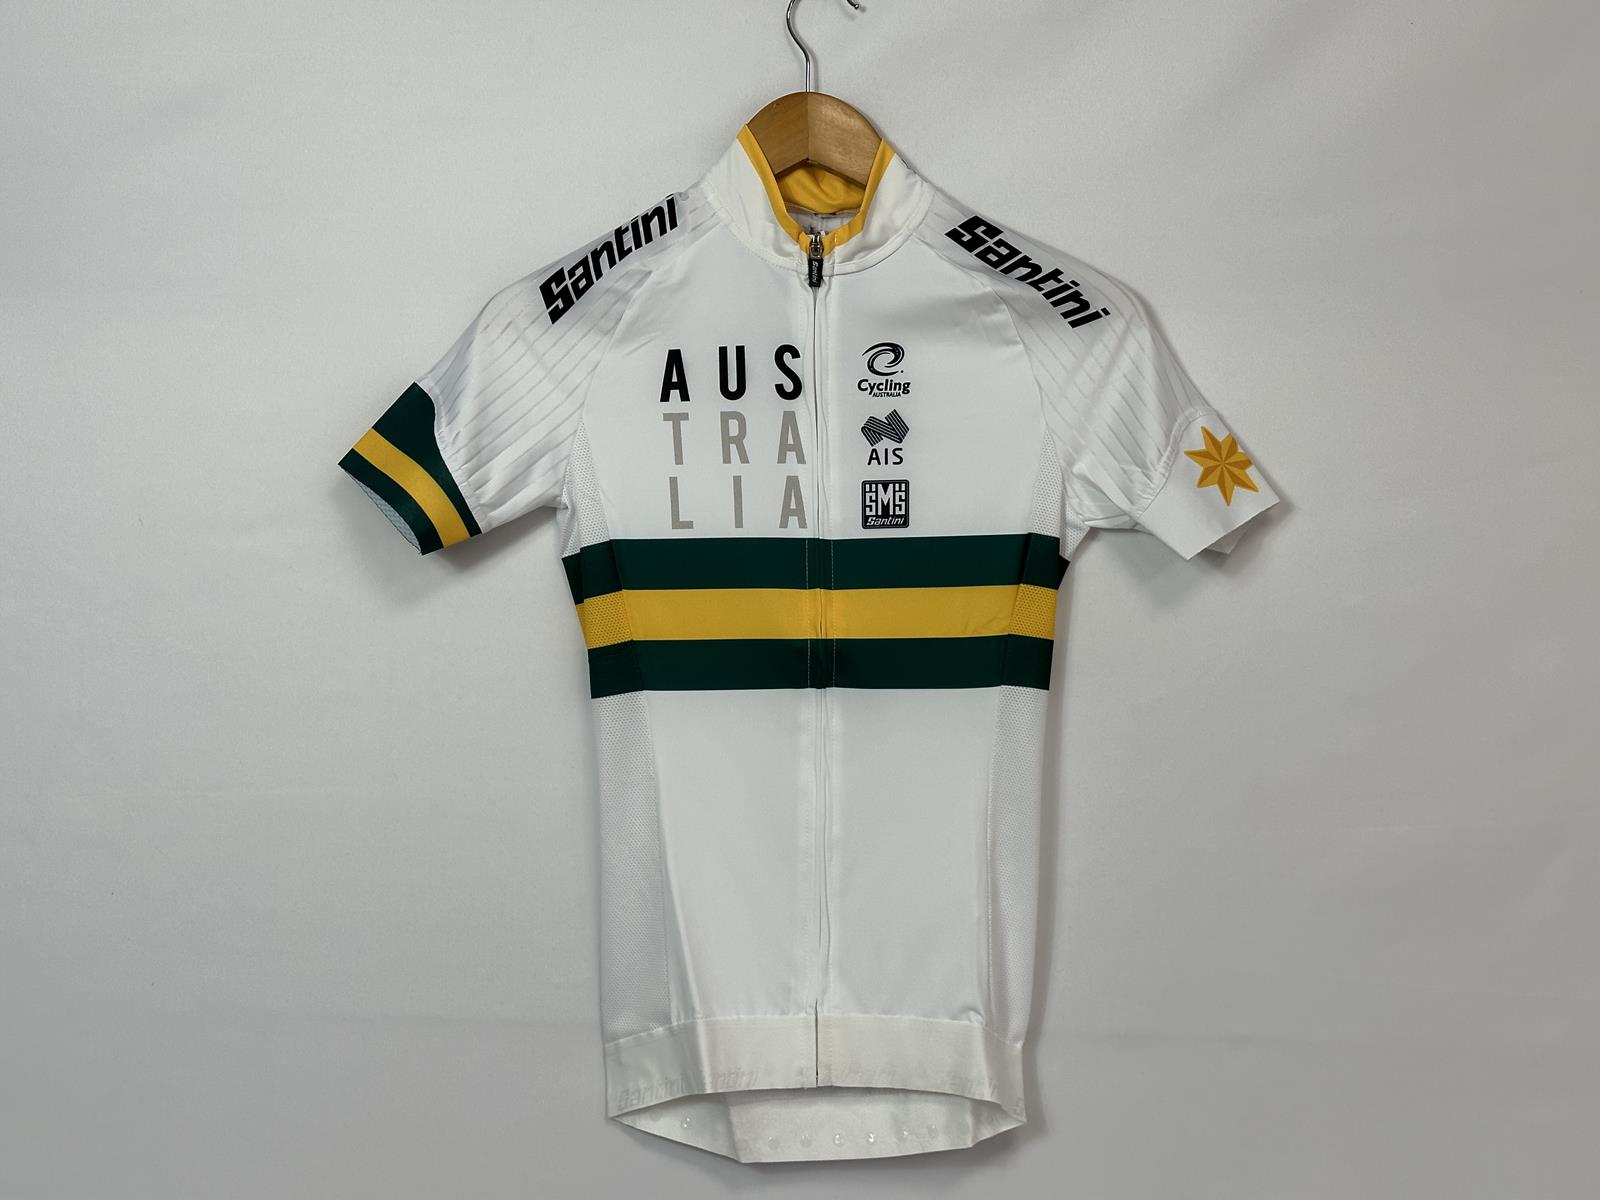 Sleek Plus Aero Jersey by Australian Cycling Team